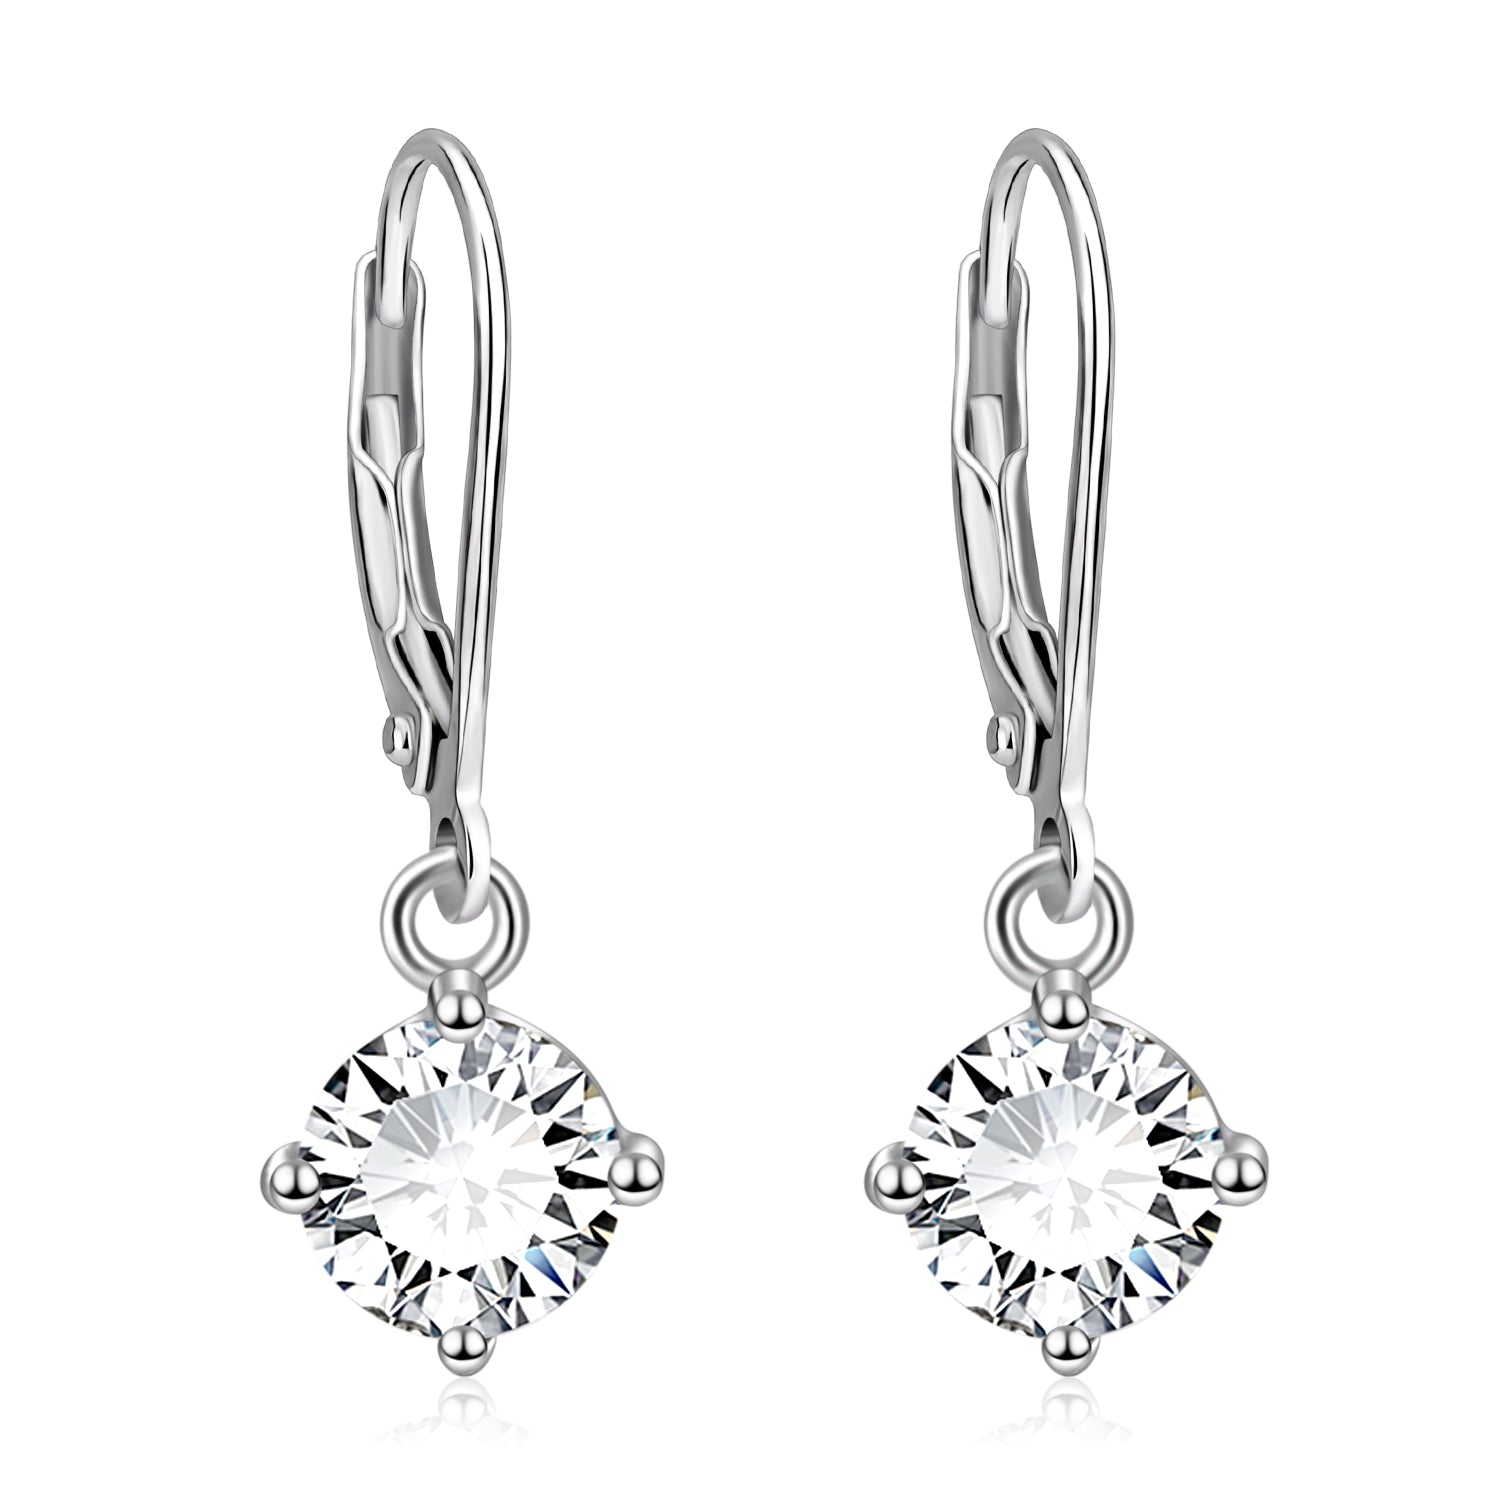 Swarovski-Crystals-Leverback-Earrings-in-18K-White-Gold-Earrings